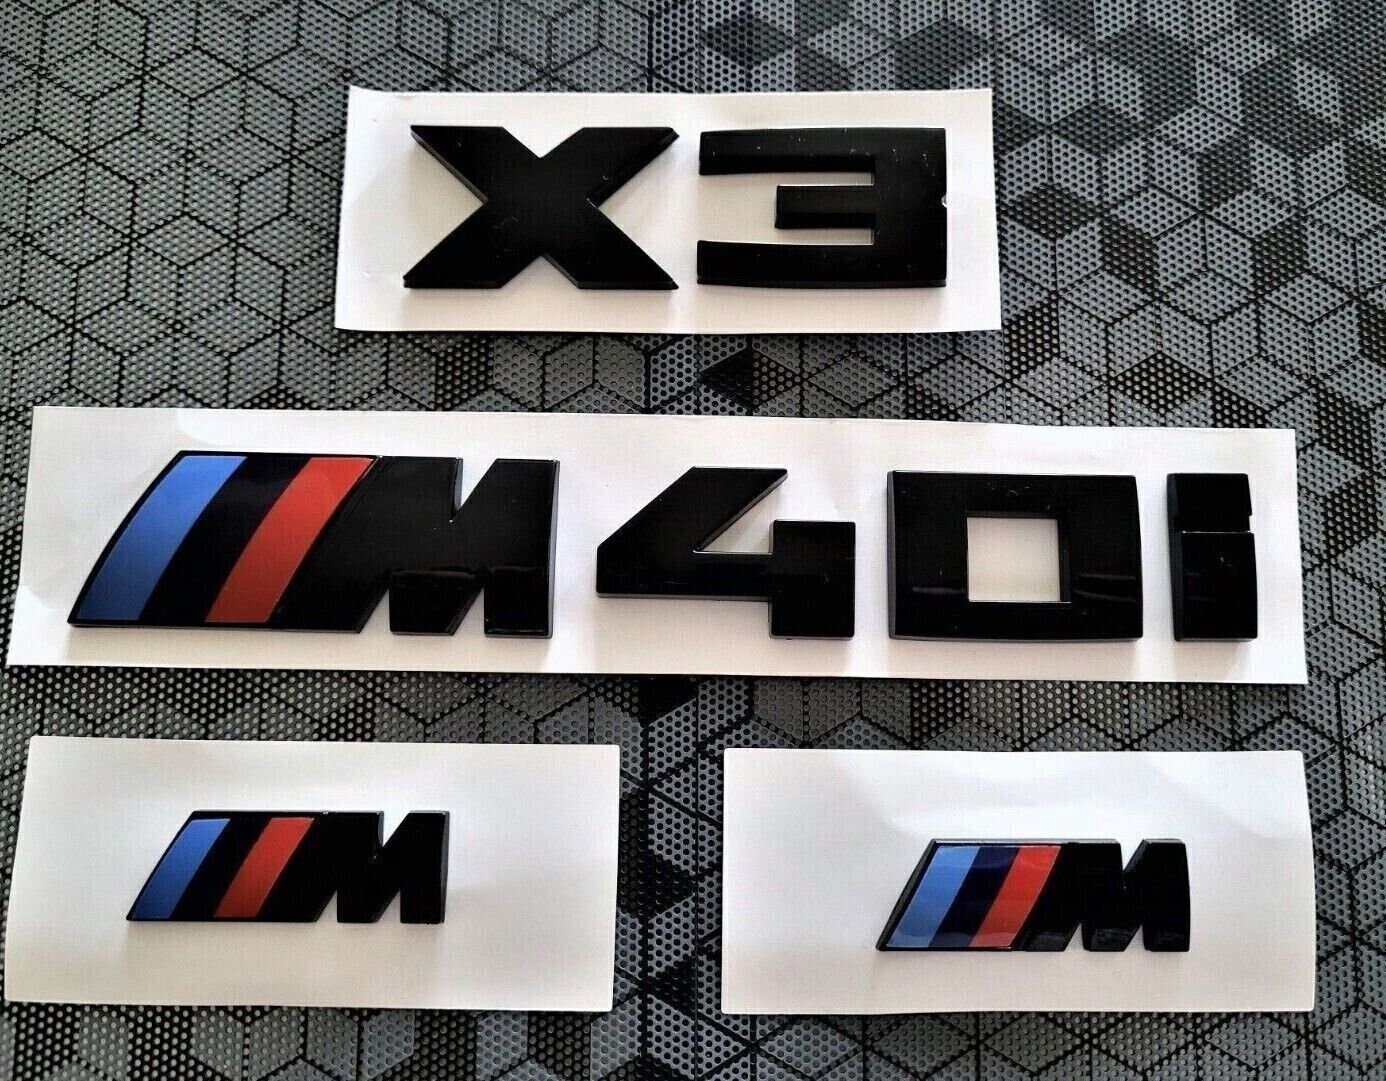 Gloss Black for X3 M40i Emblem Rear and Fender Set. X3 M40i Emblem set